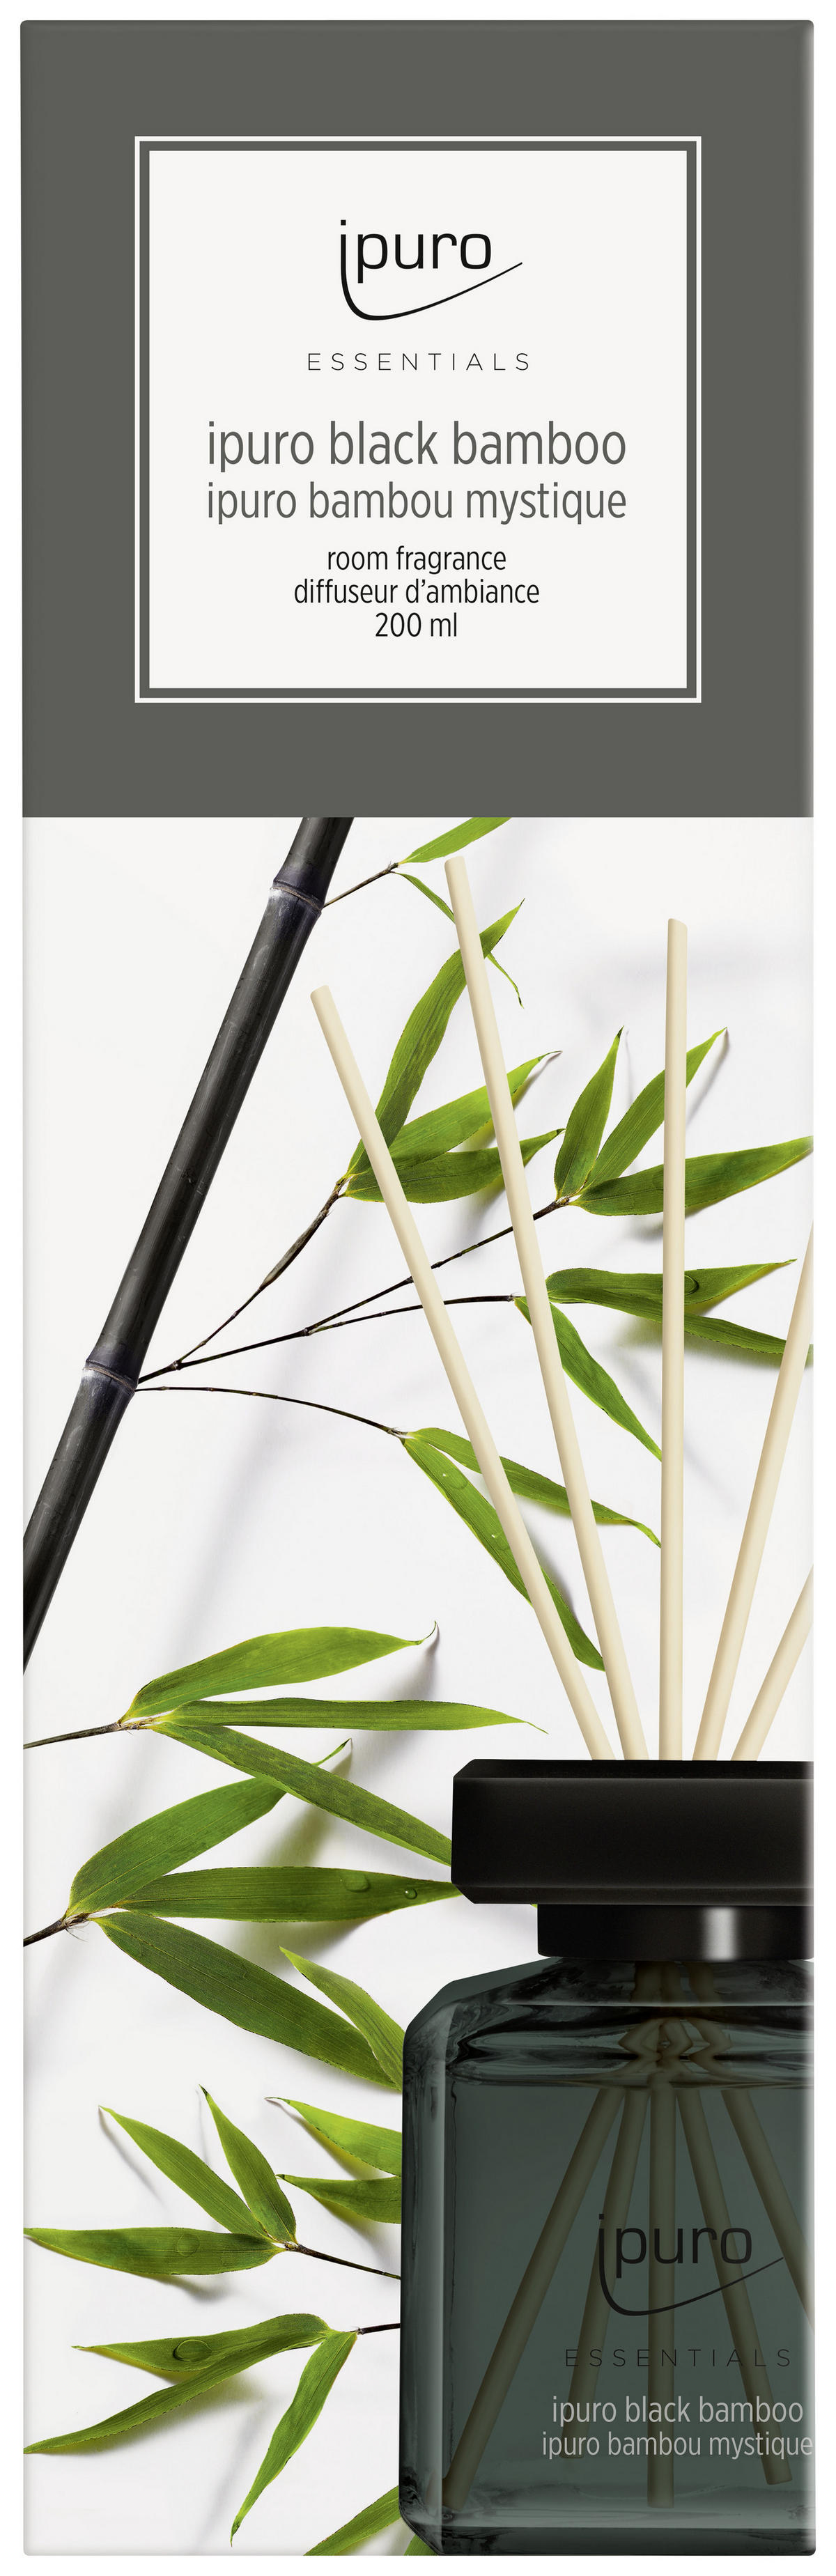 Ipuro DIŠAVA ZA PROSTOR Essentials Black Bamboo v spletni trgovini